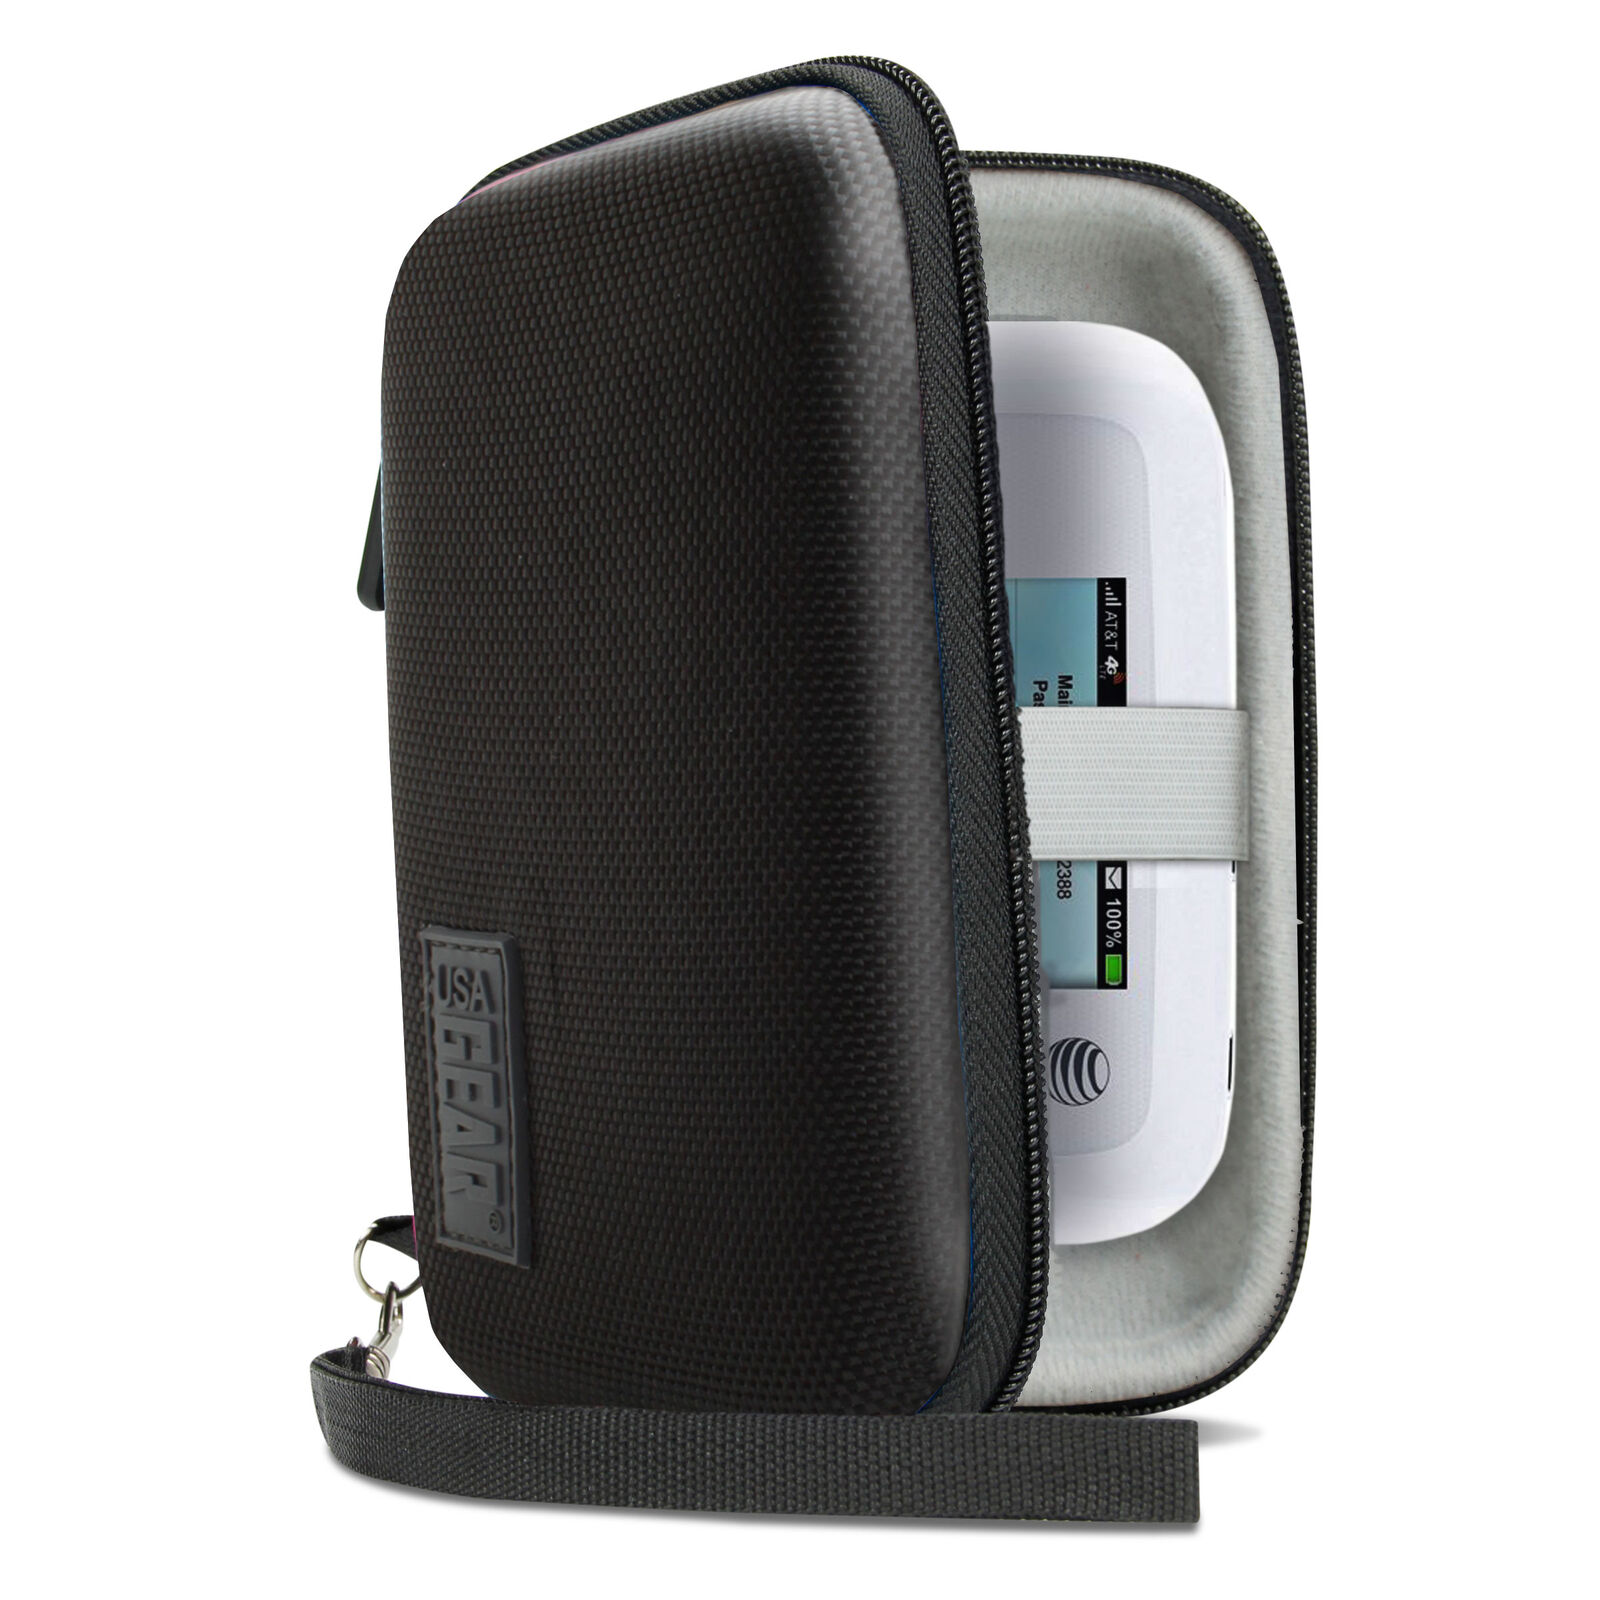 USA GEAR Portable Wi-Fi Mobile Hotspot Carrying Case